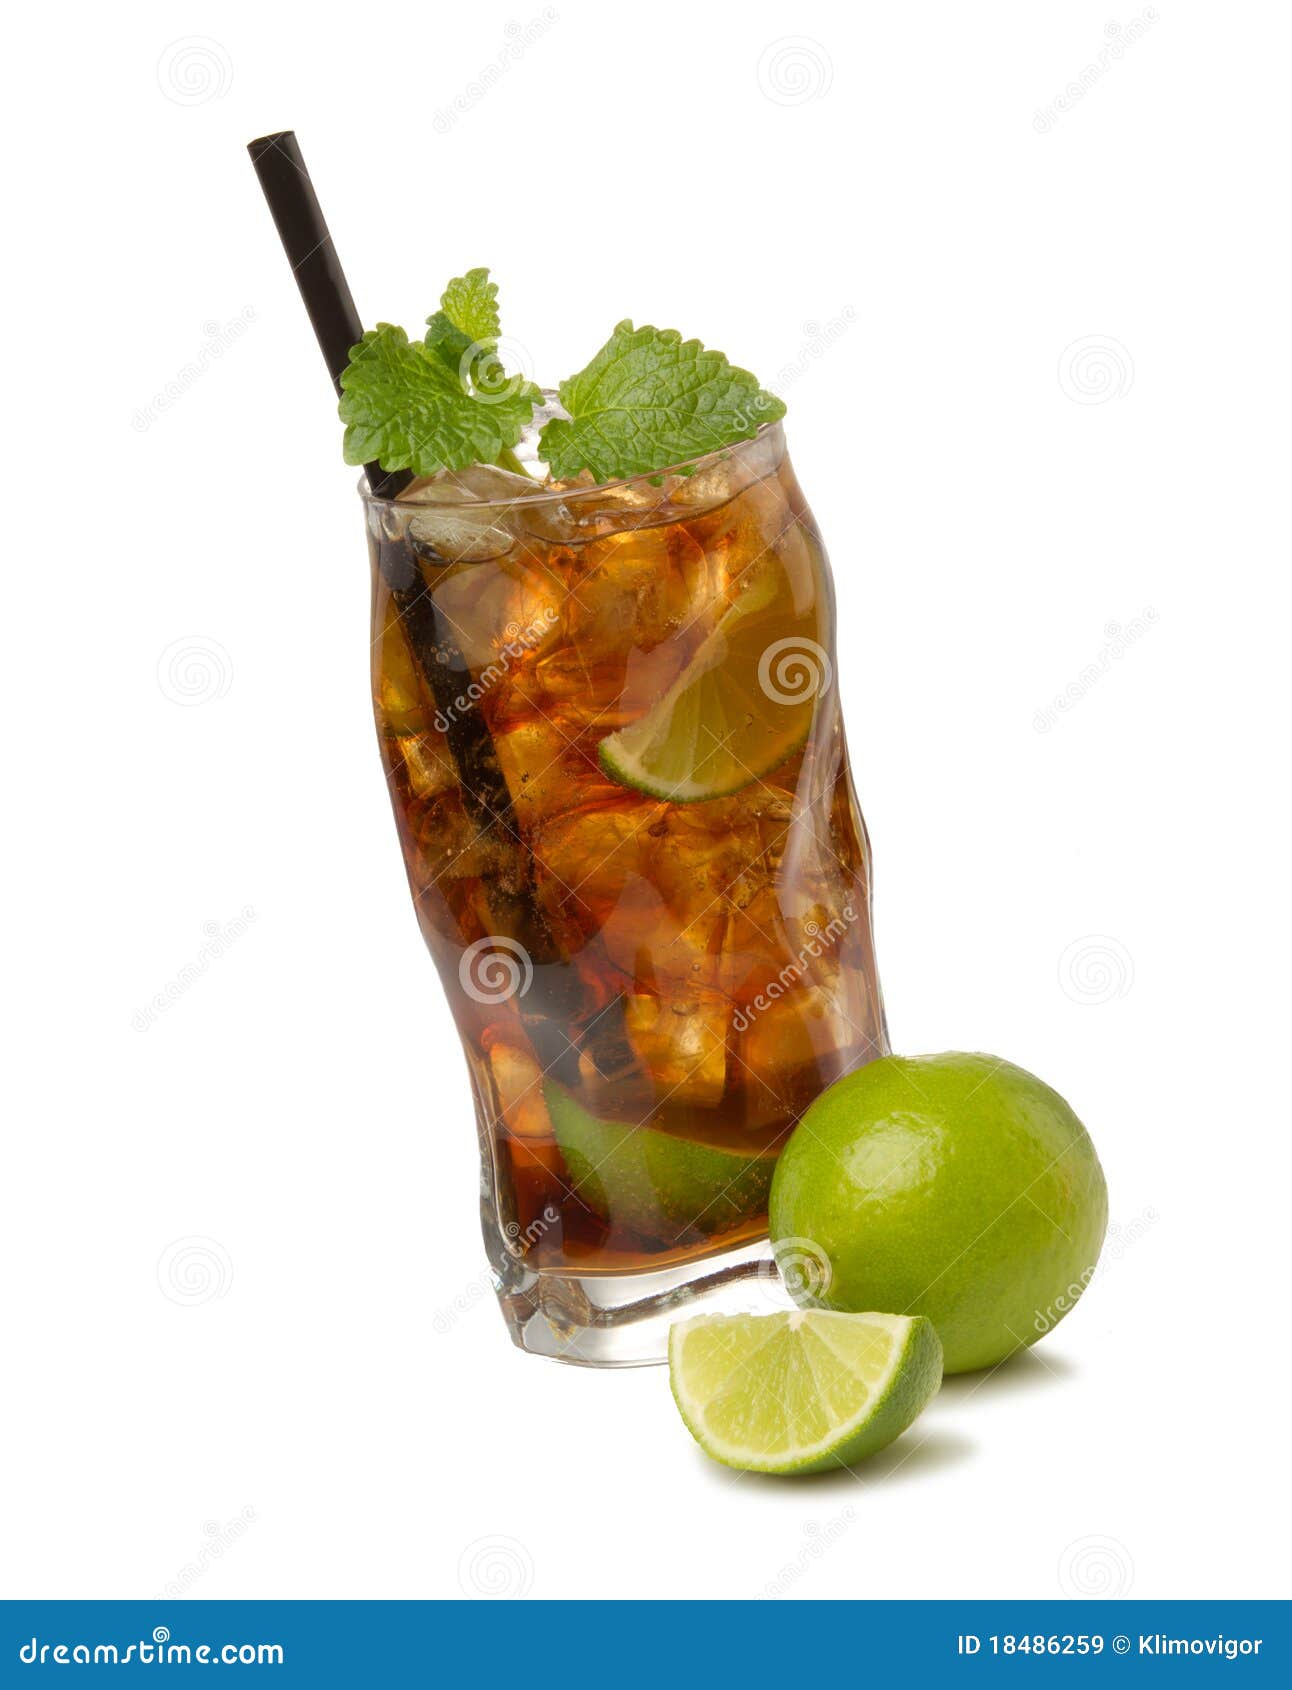 Cuba libre cocktail stock image. Image of garnish, drink - 18486259